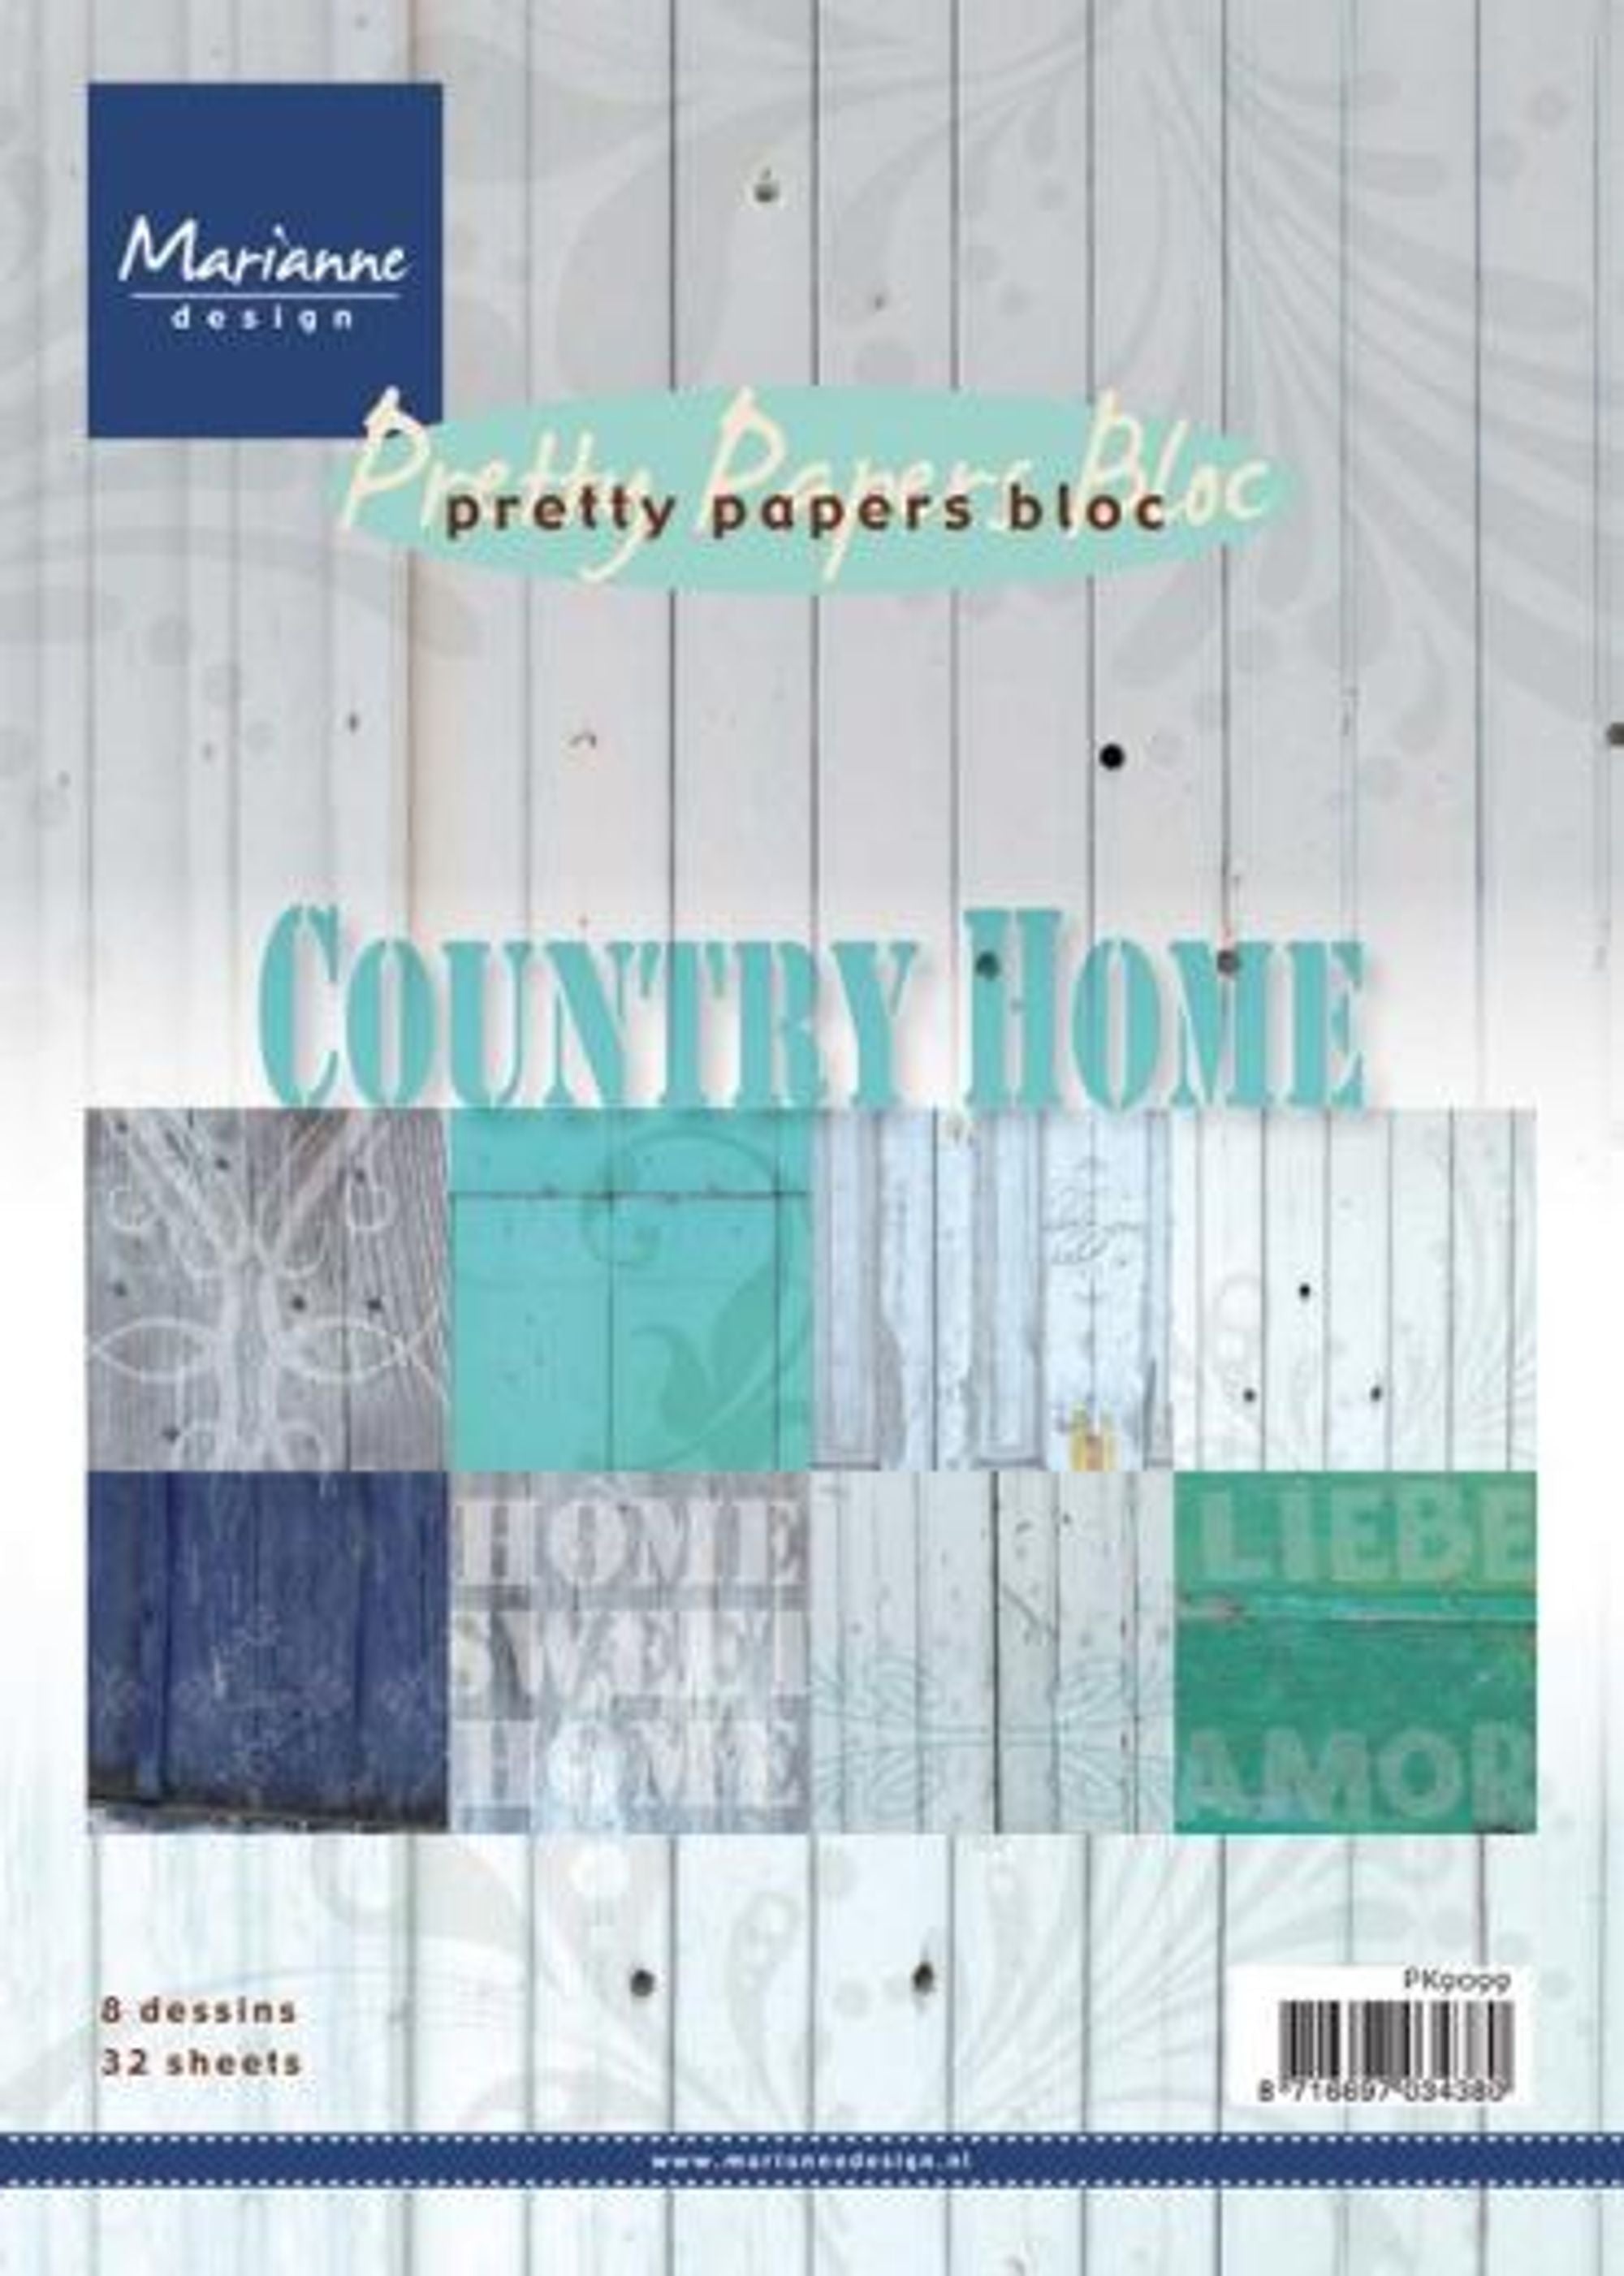 Marianne Design A5 Pretty Paper Bloc Country Home